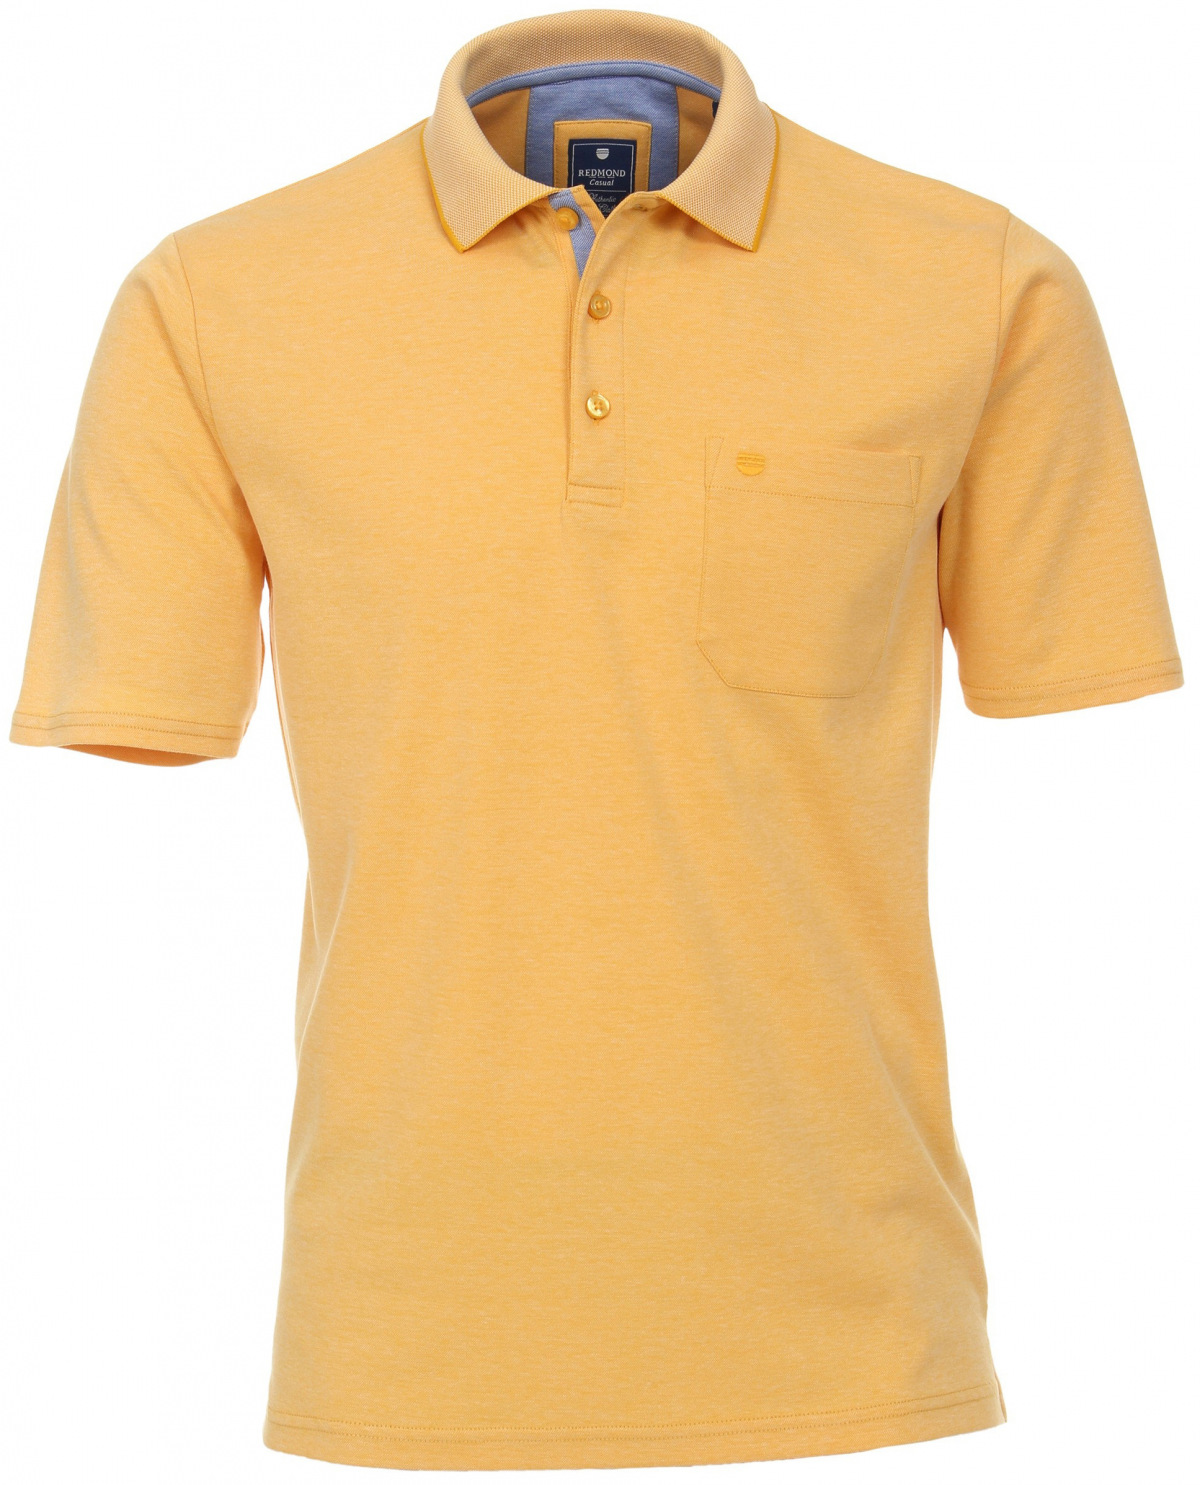 Redmond Poloshirt - Regular Fit - Wash - Wear gelb and